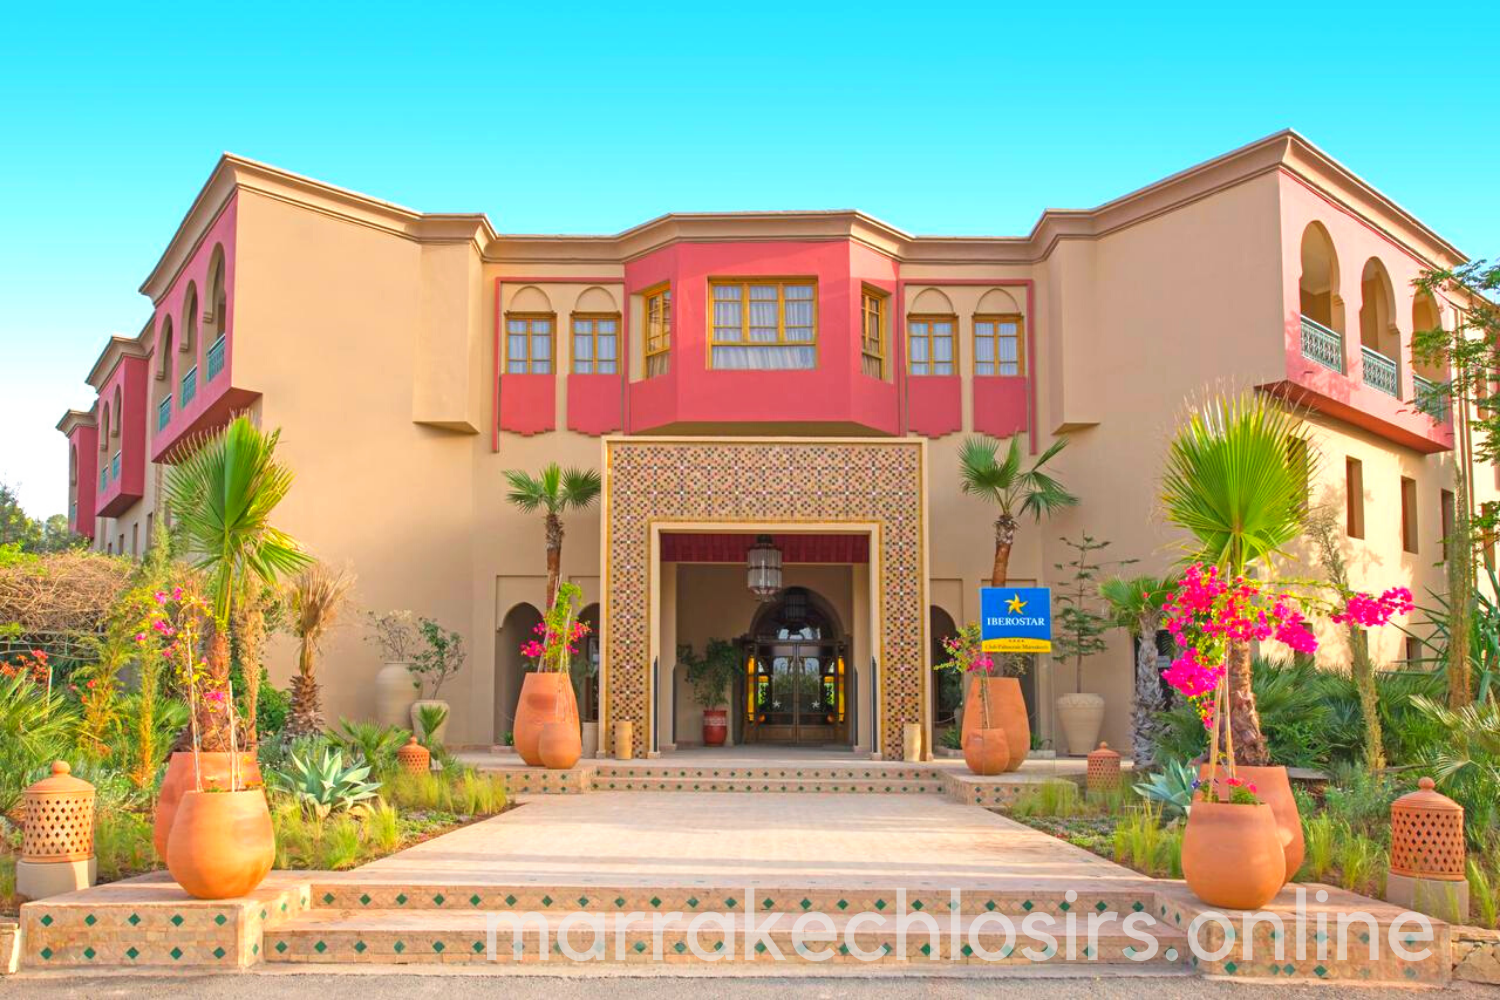 Hôtel Iberostar Club Palmeraie Marrakech 4 étoiles All Inclusive - Marrakech Loisirs Online